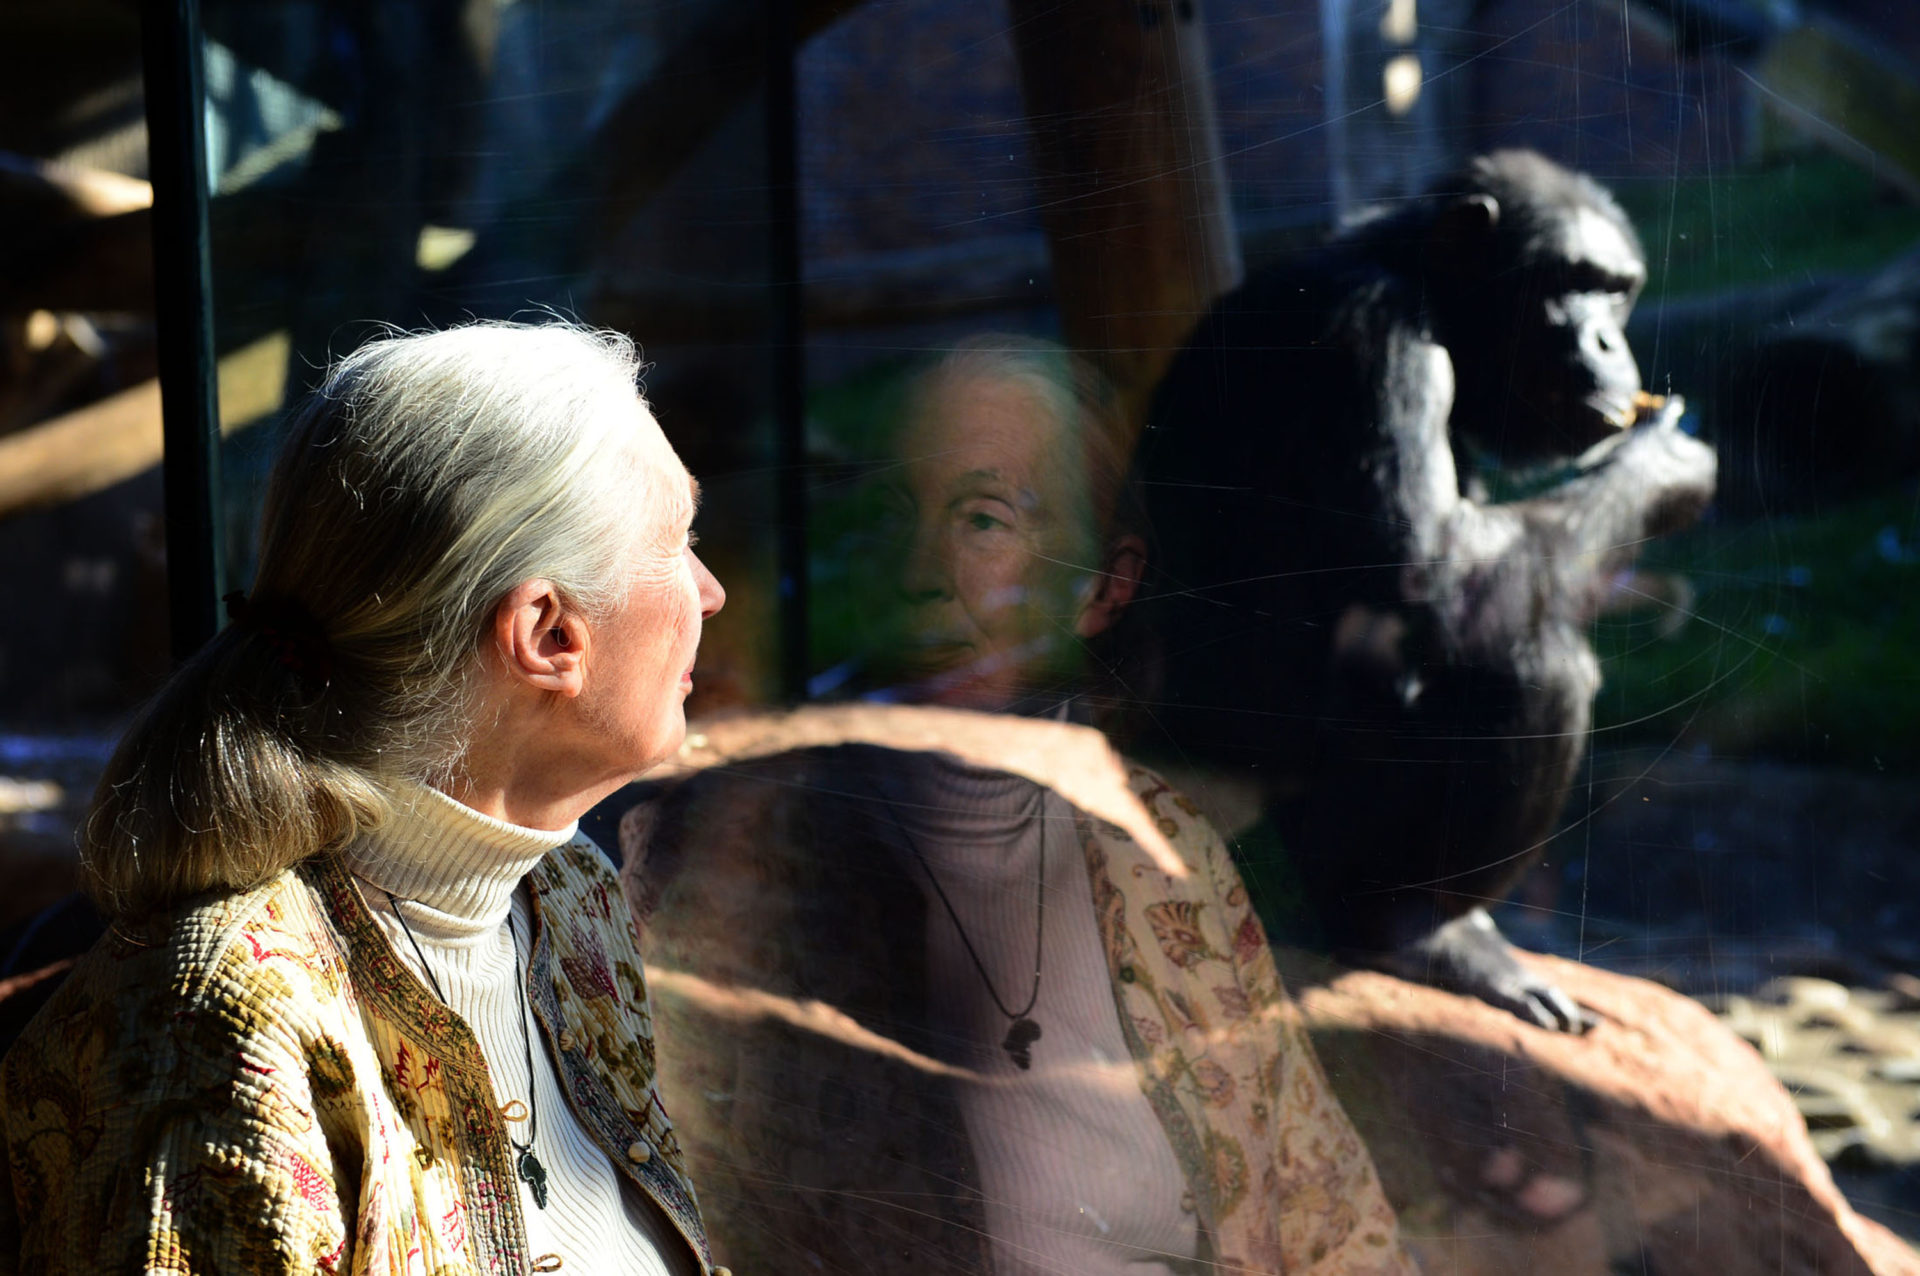 Jane Goodall looks at chimpanzee through glass at zoo in Australia